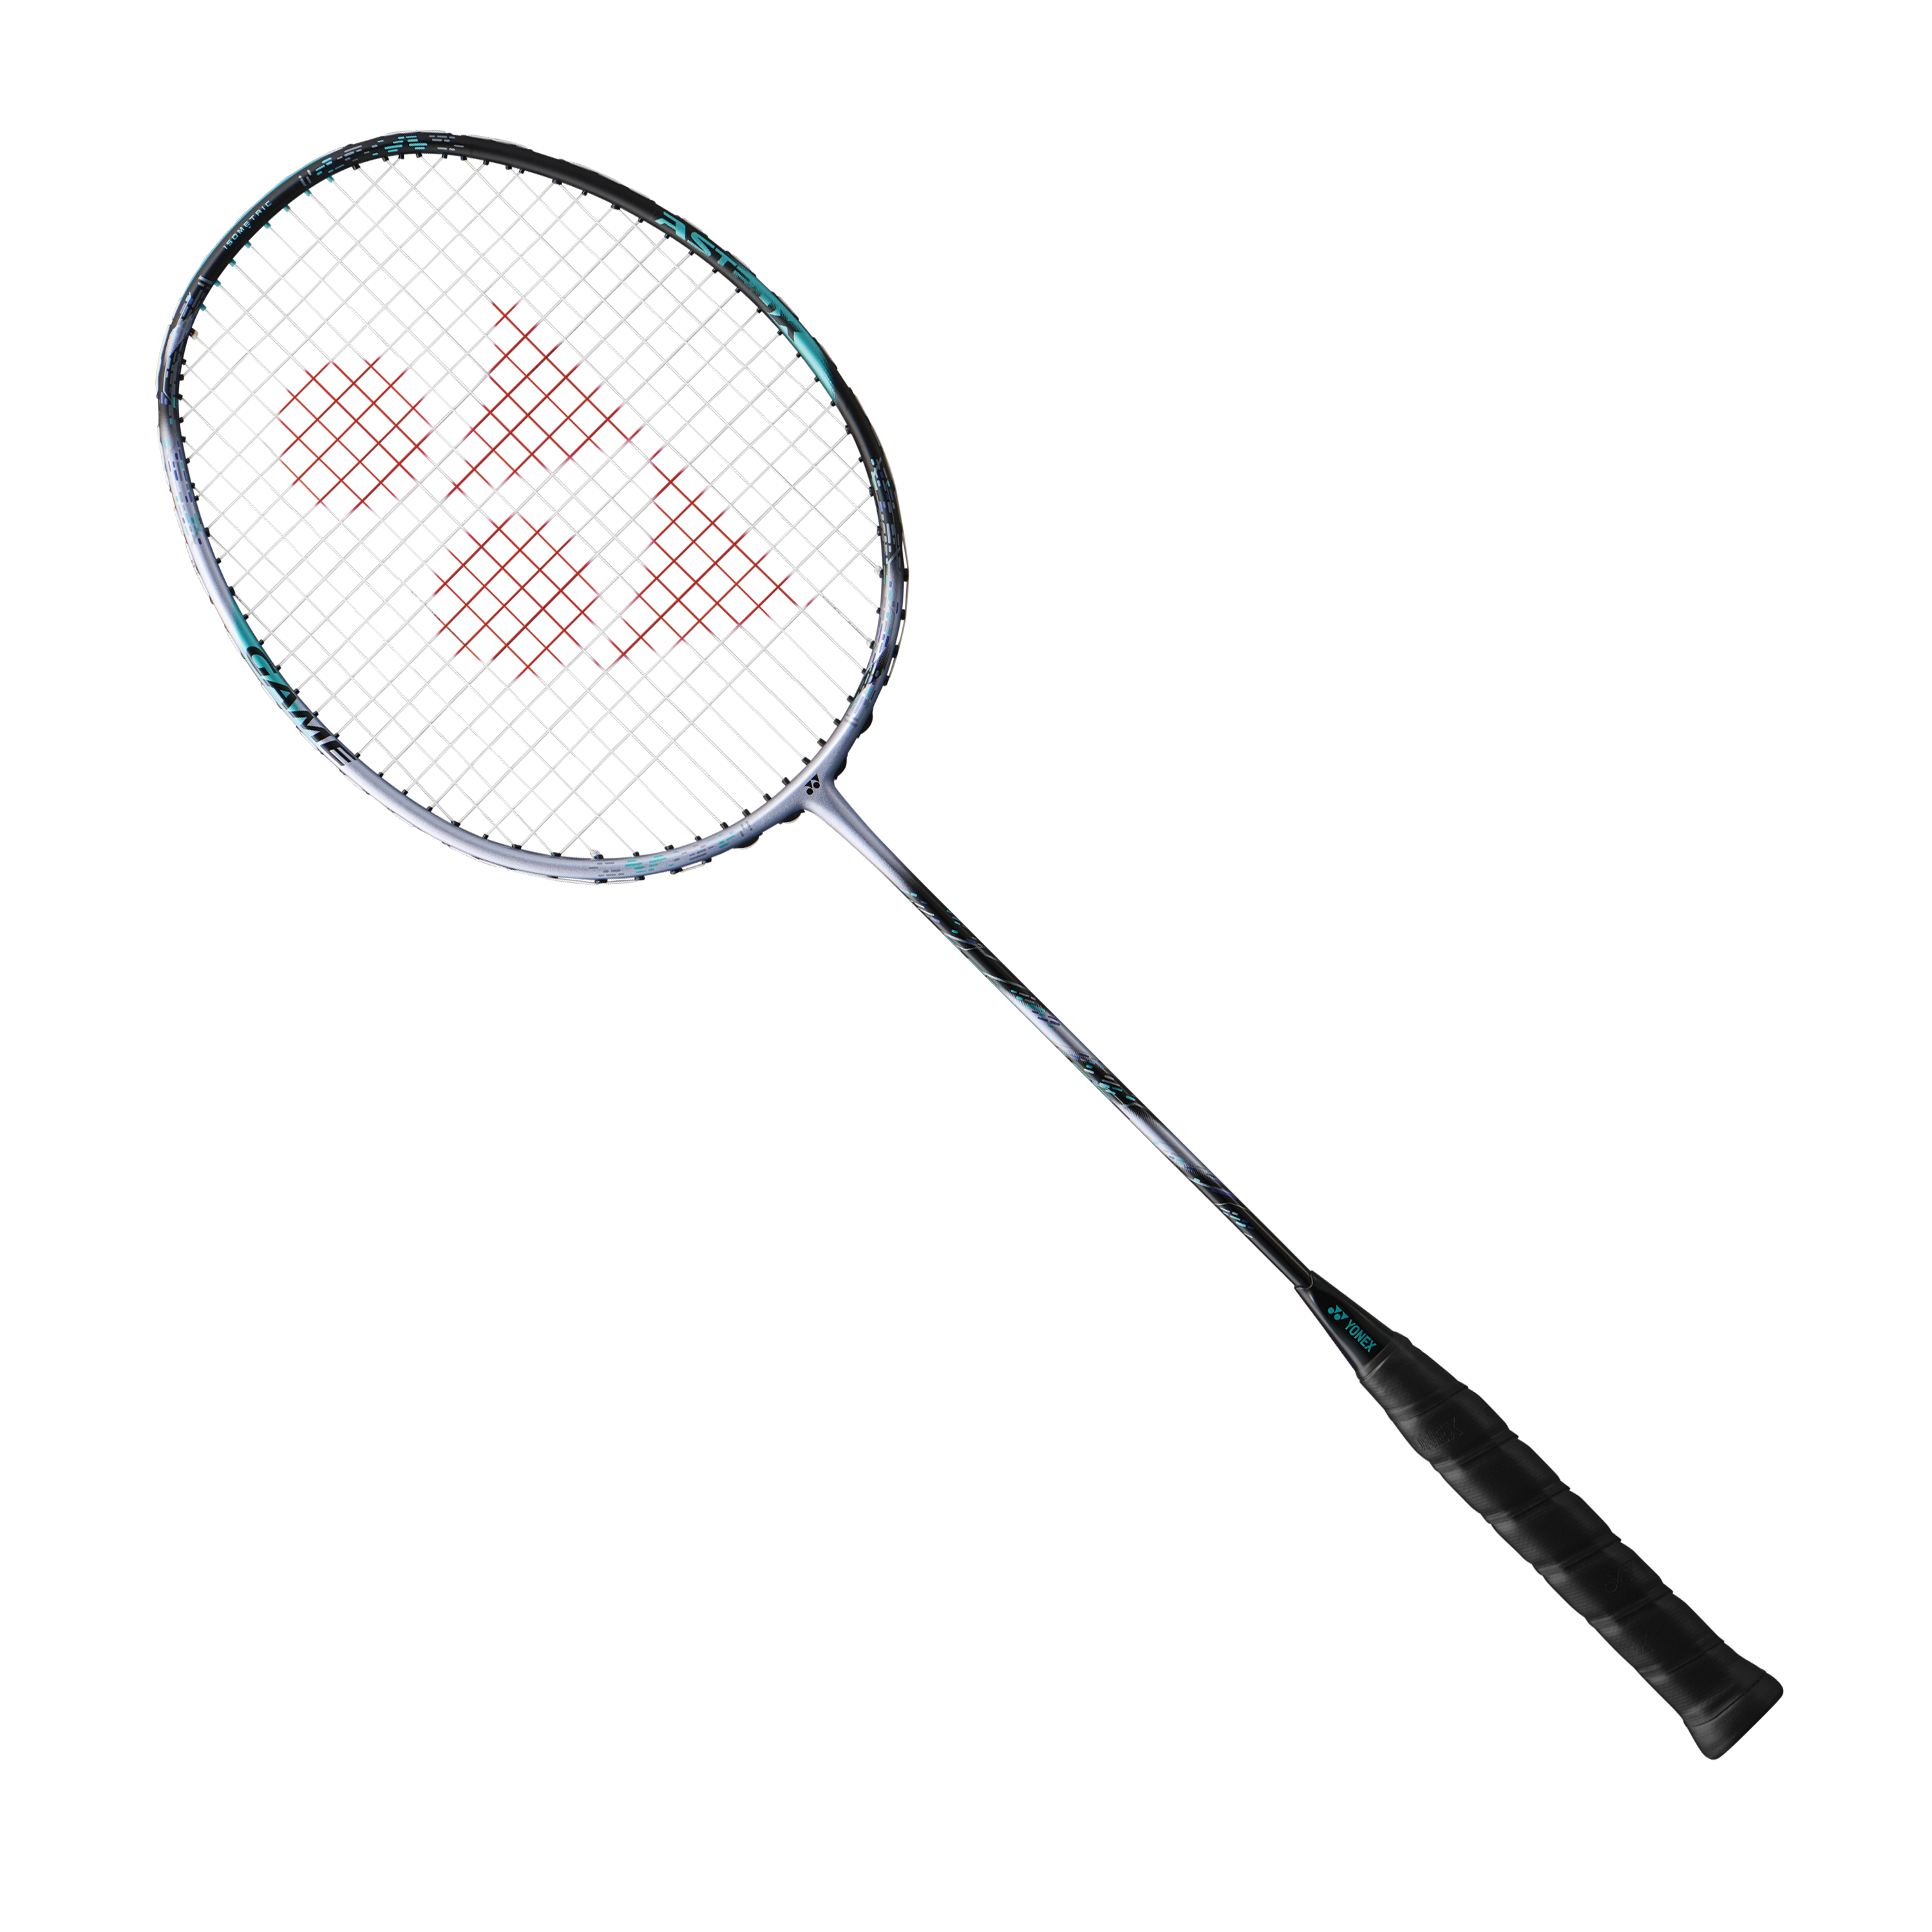 Yonex Astrox 88S Game Badminton Racquet Silver/ Black 4U(83g)G5 (Ready to Go)